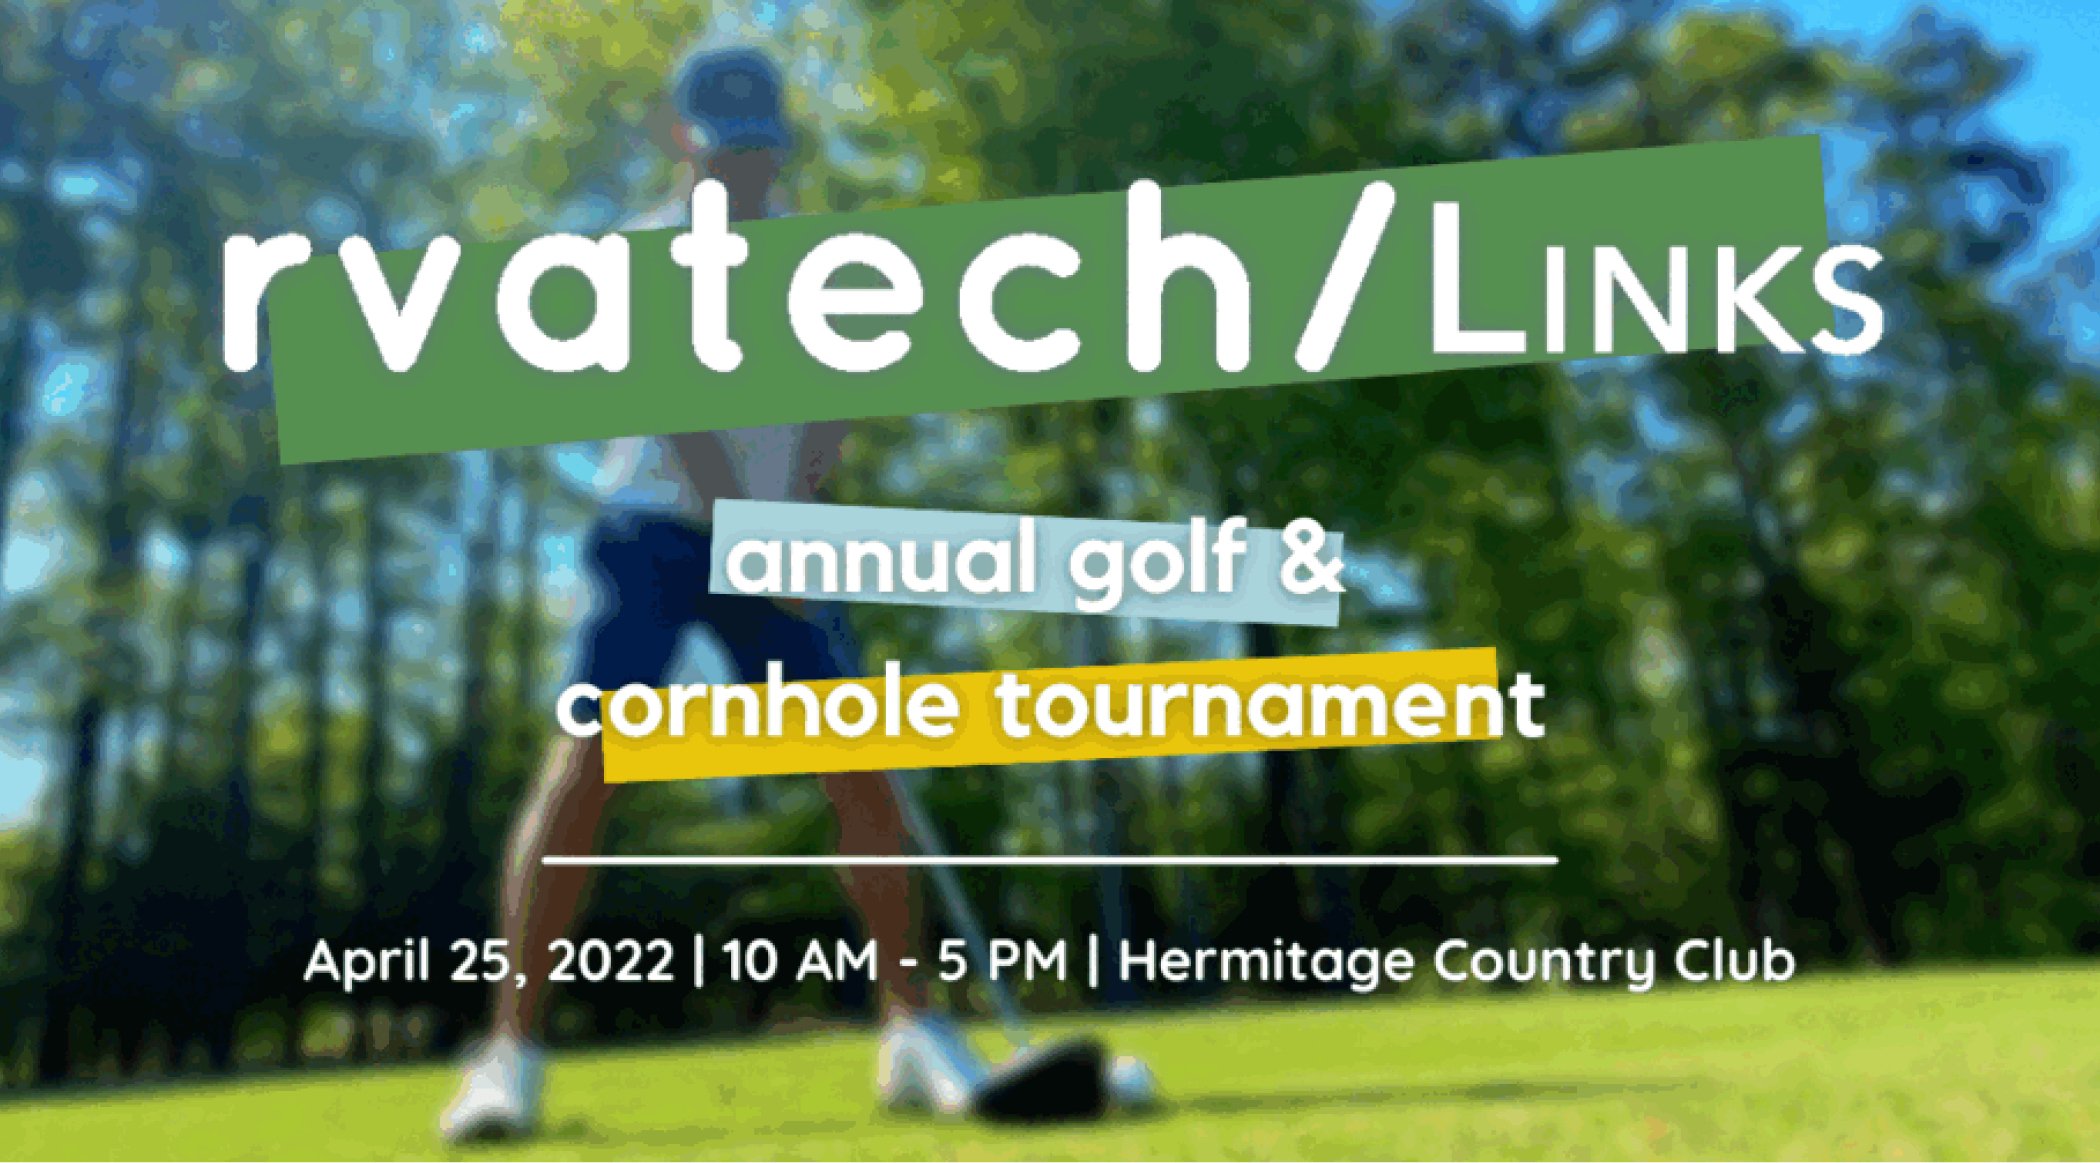 RVATech Links Annual Golf   Cornhole Tournament